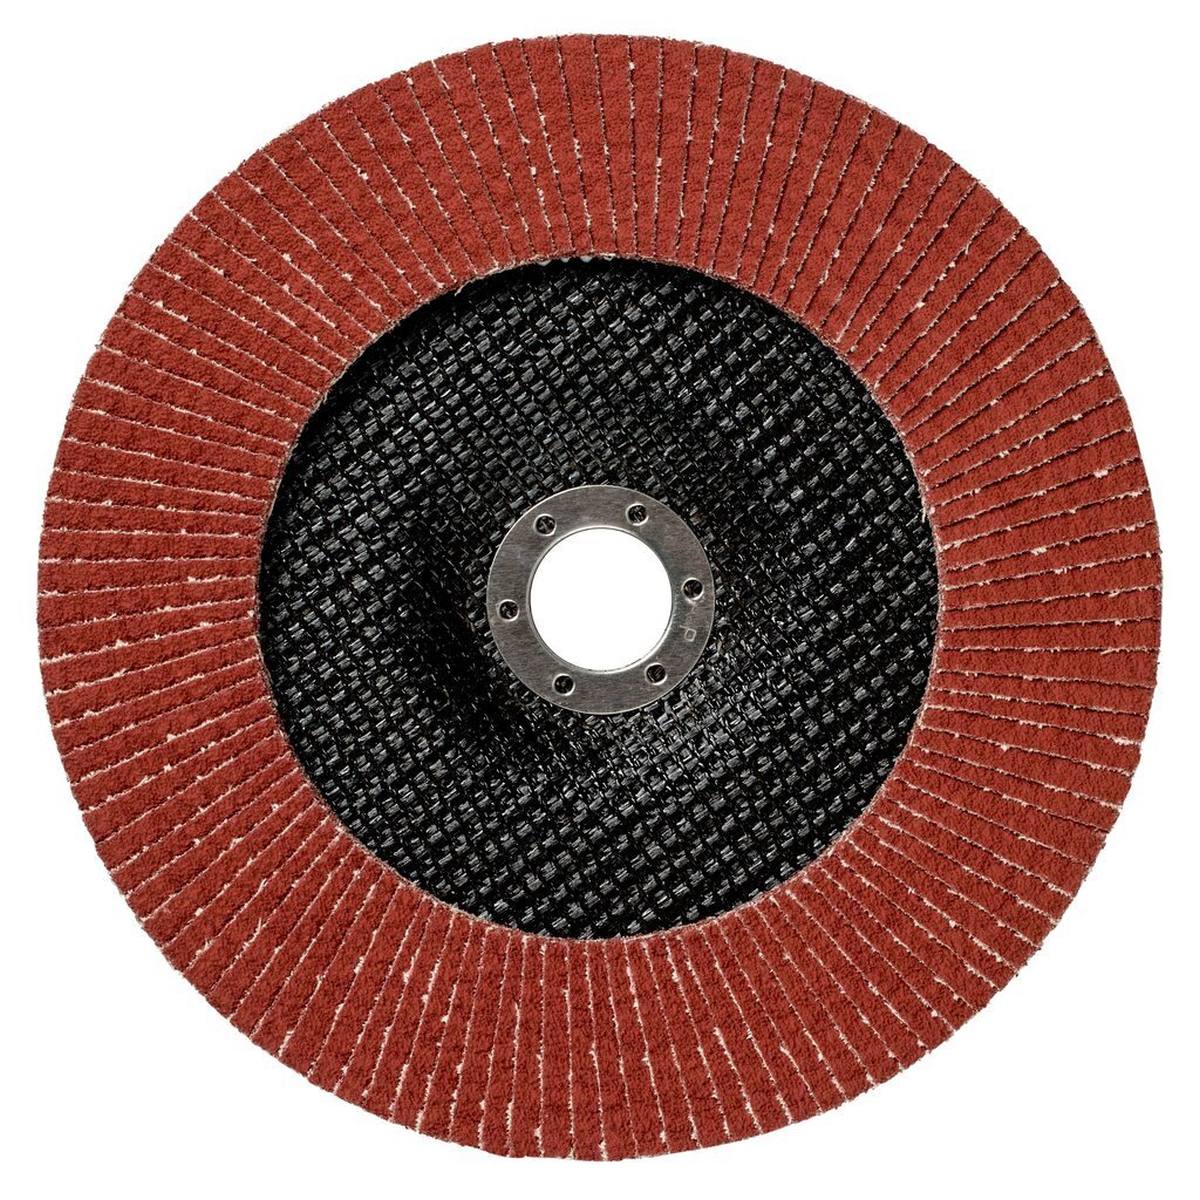 3M Cubitron II disco de láminas 967A, 180 mm, 22,23 mm, P80+ #65074 plano